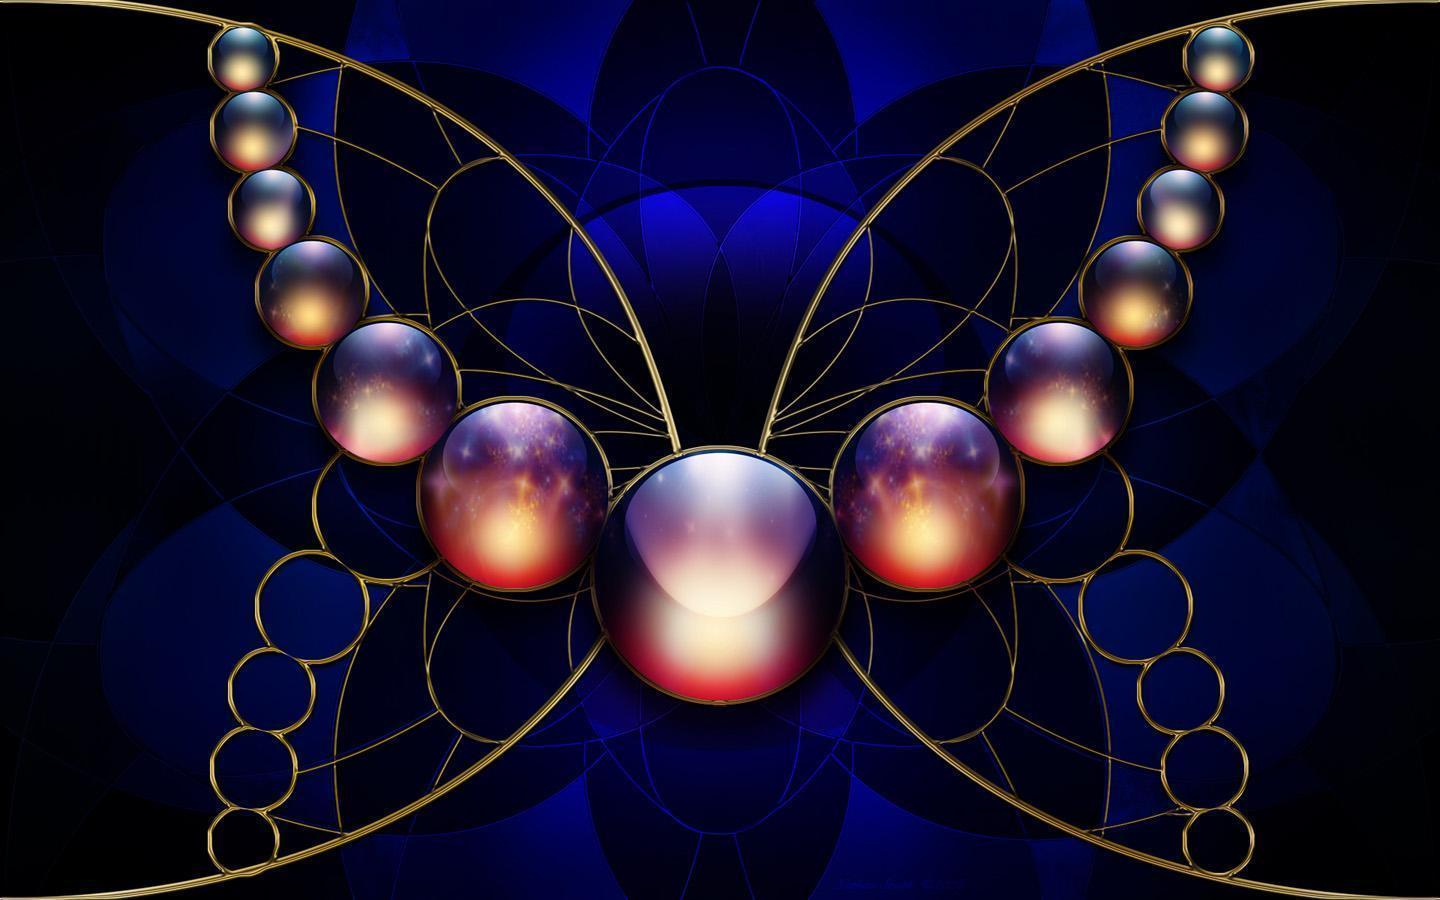 Butterfly 3D art free desktop background wallpaper image